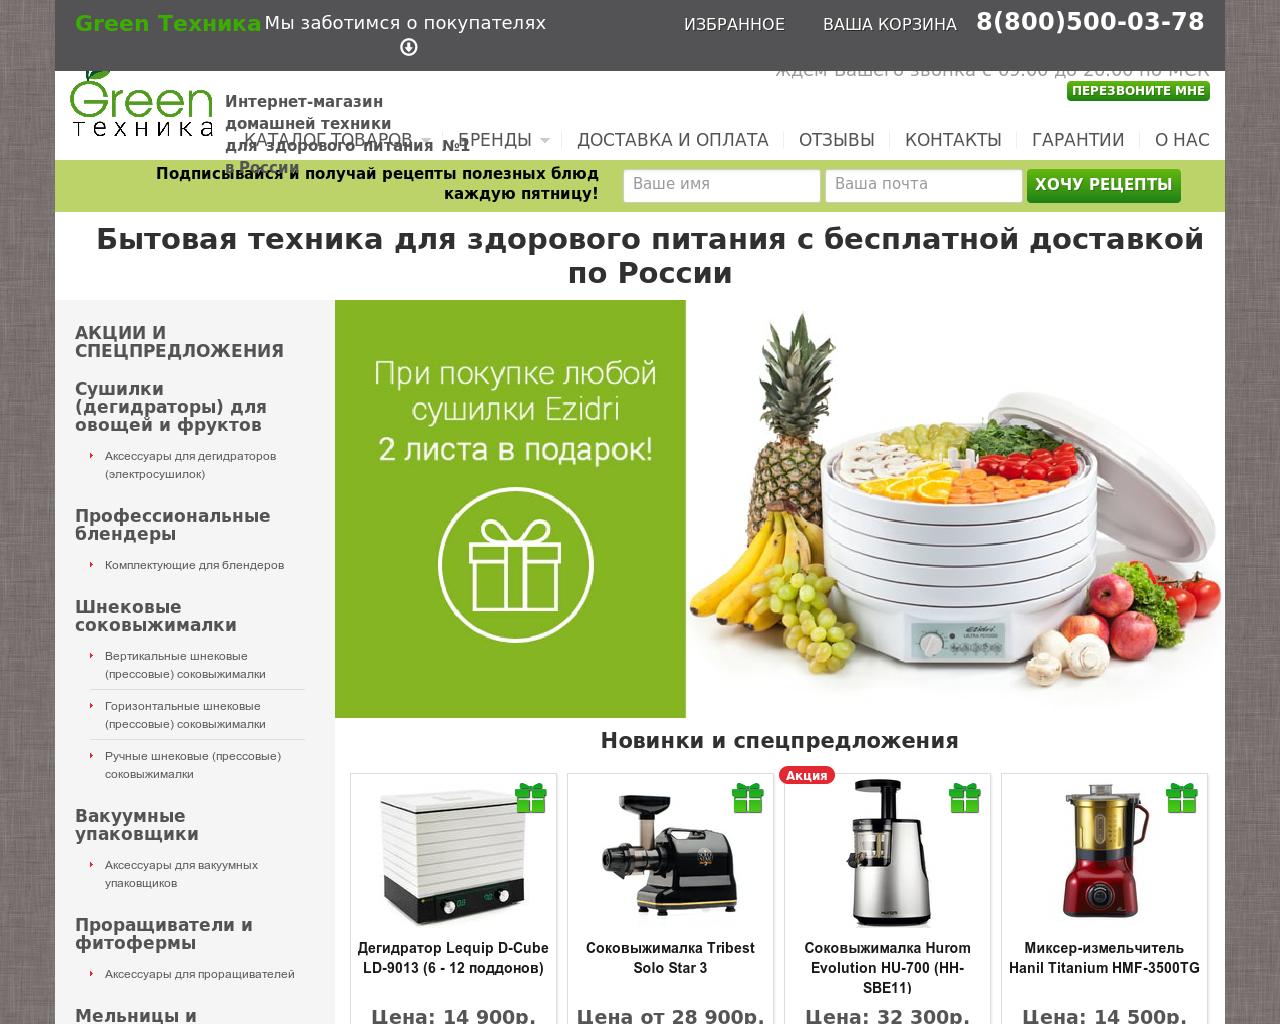 Изображение сайта green-technika.ru в разрешении 1280x1024